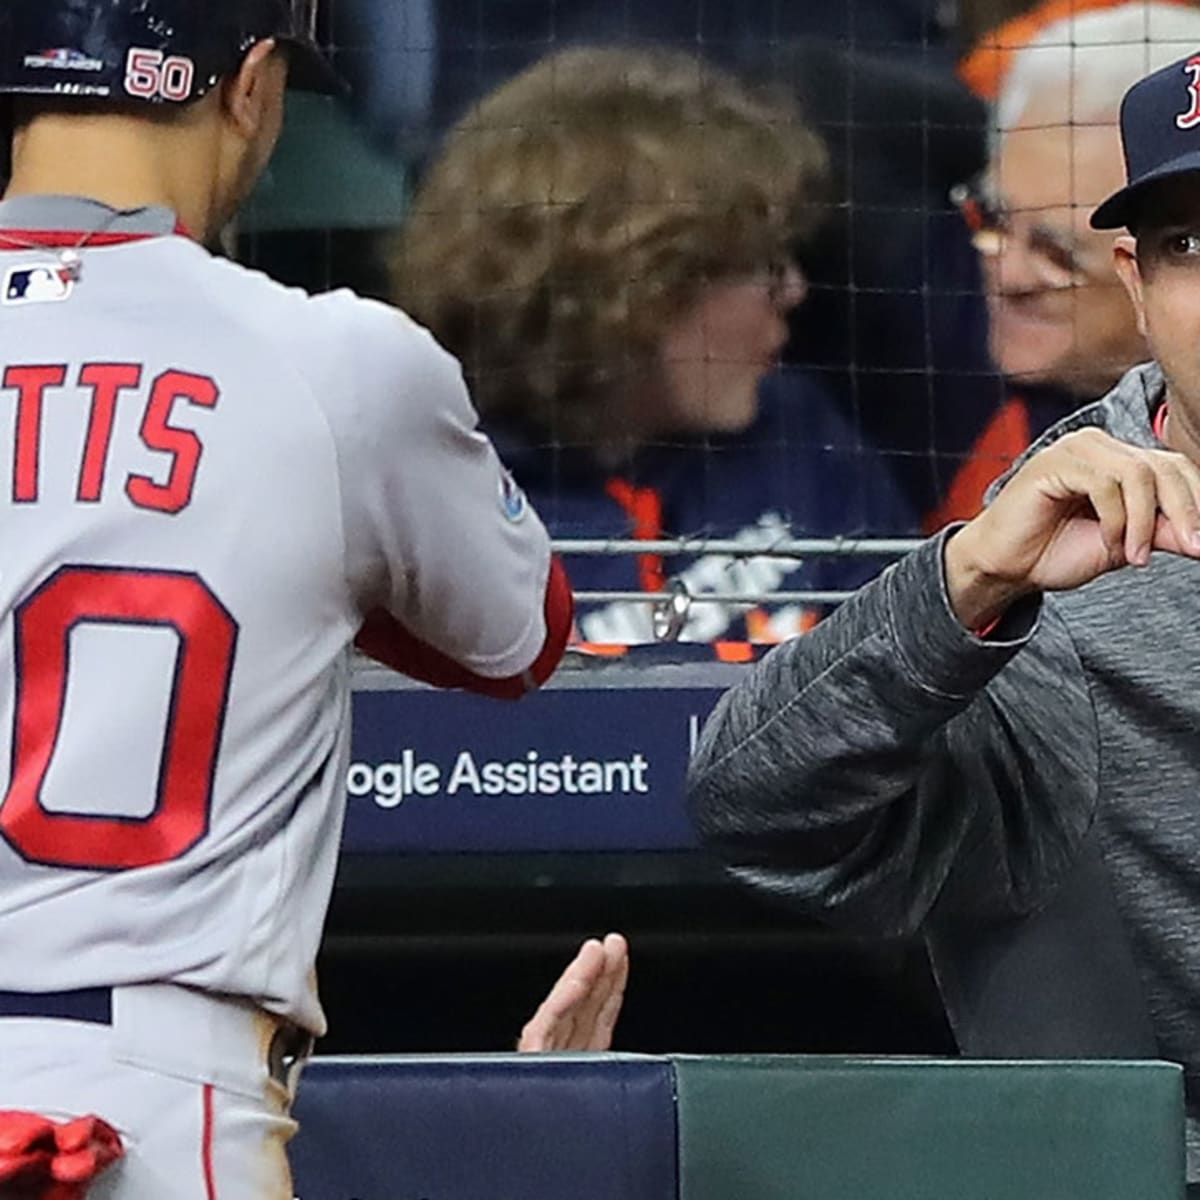 Alex Cora details Boston Red Sox's journey to World Series